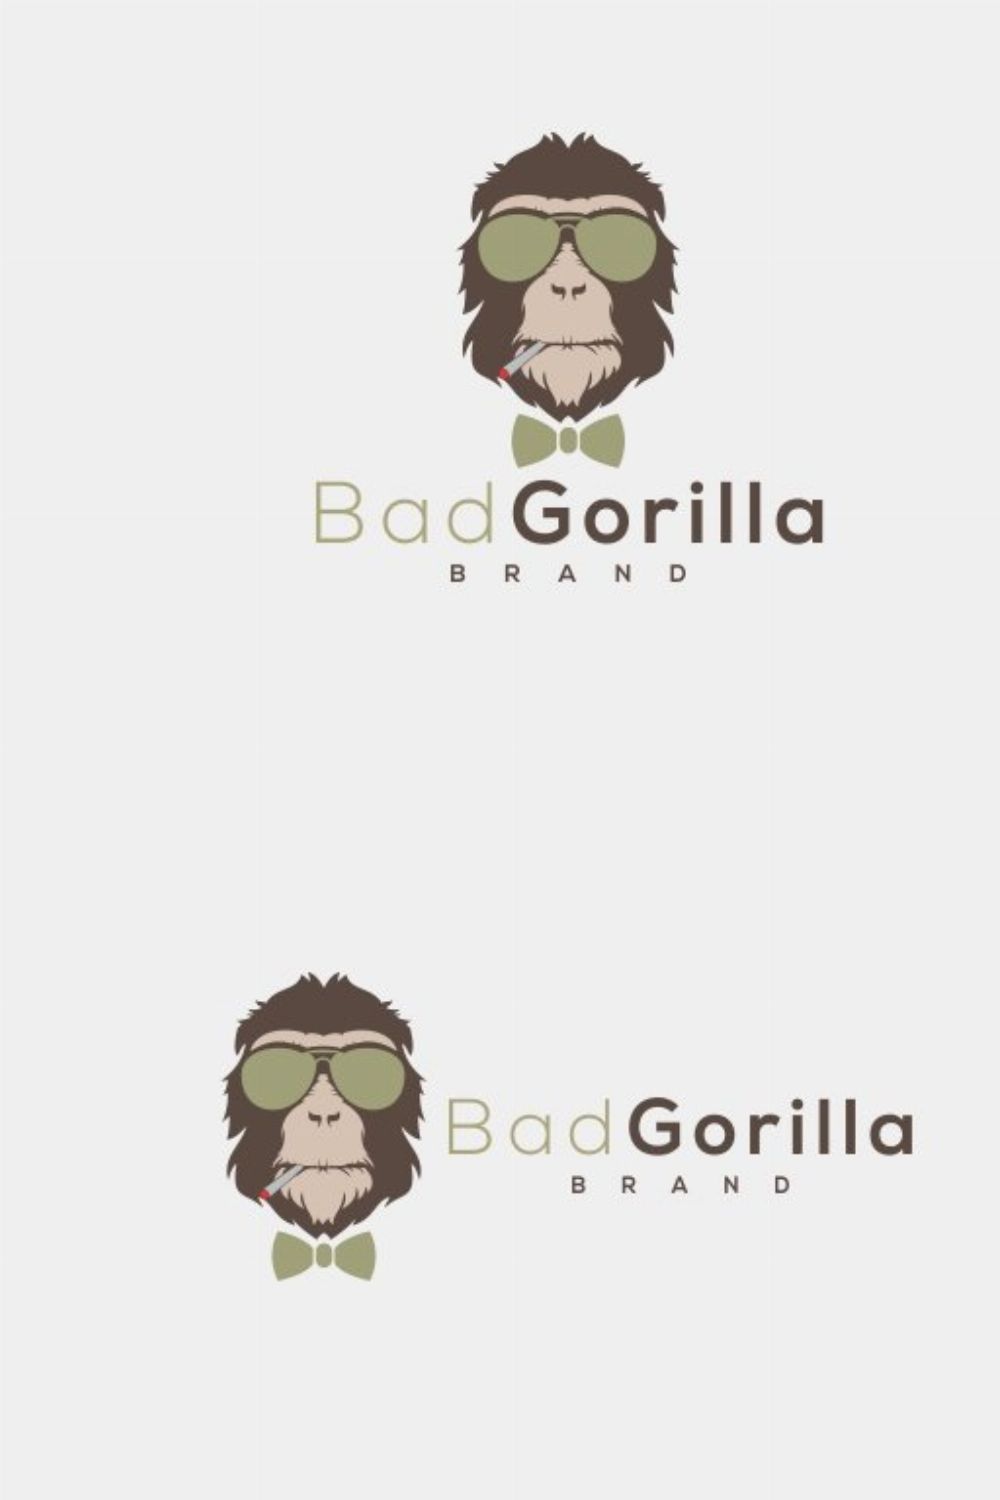 Bad Gorilla logo pinterest preview image.